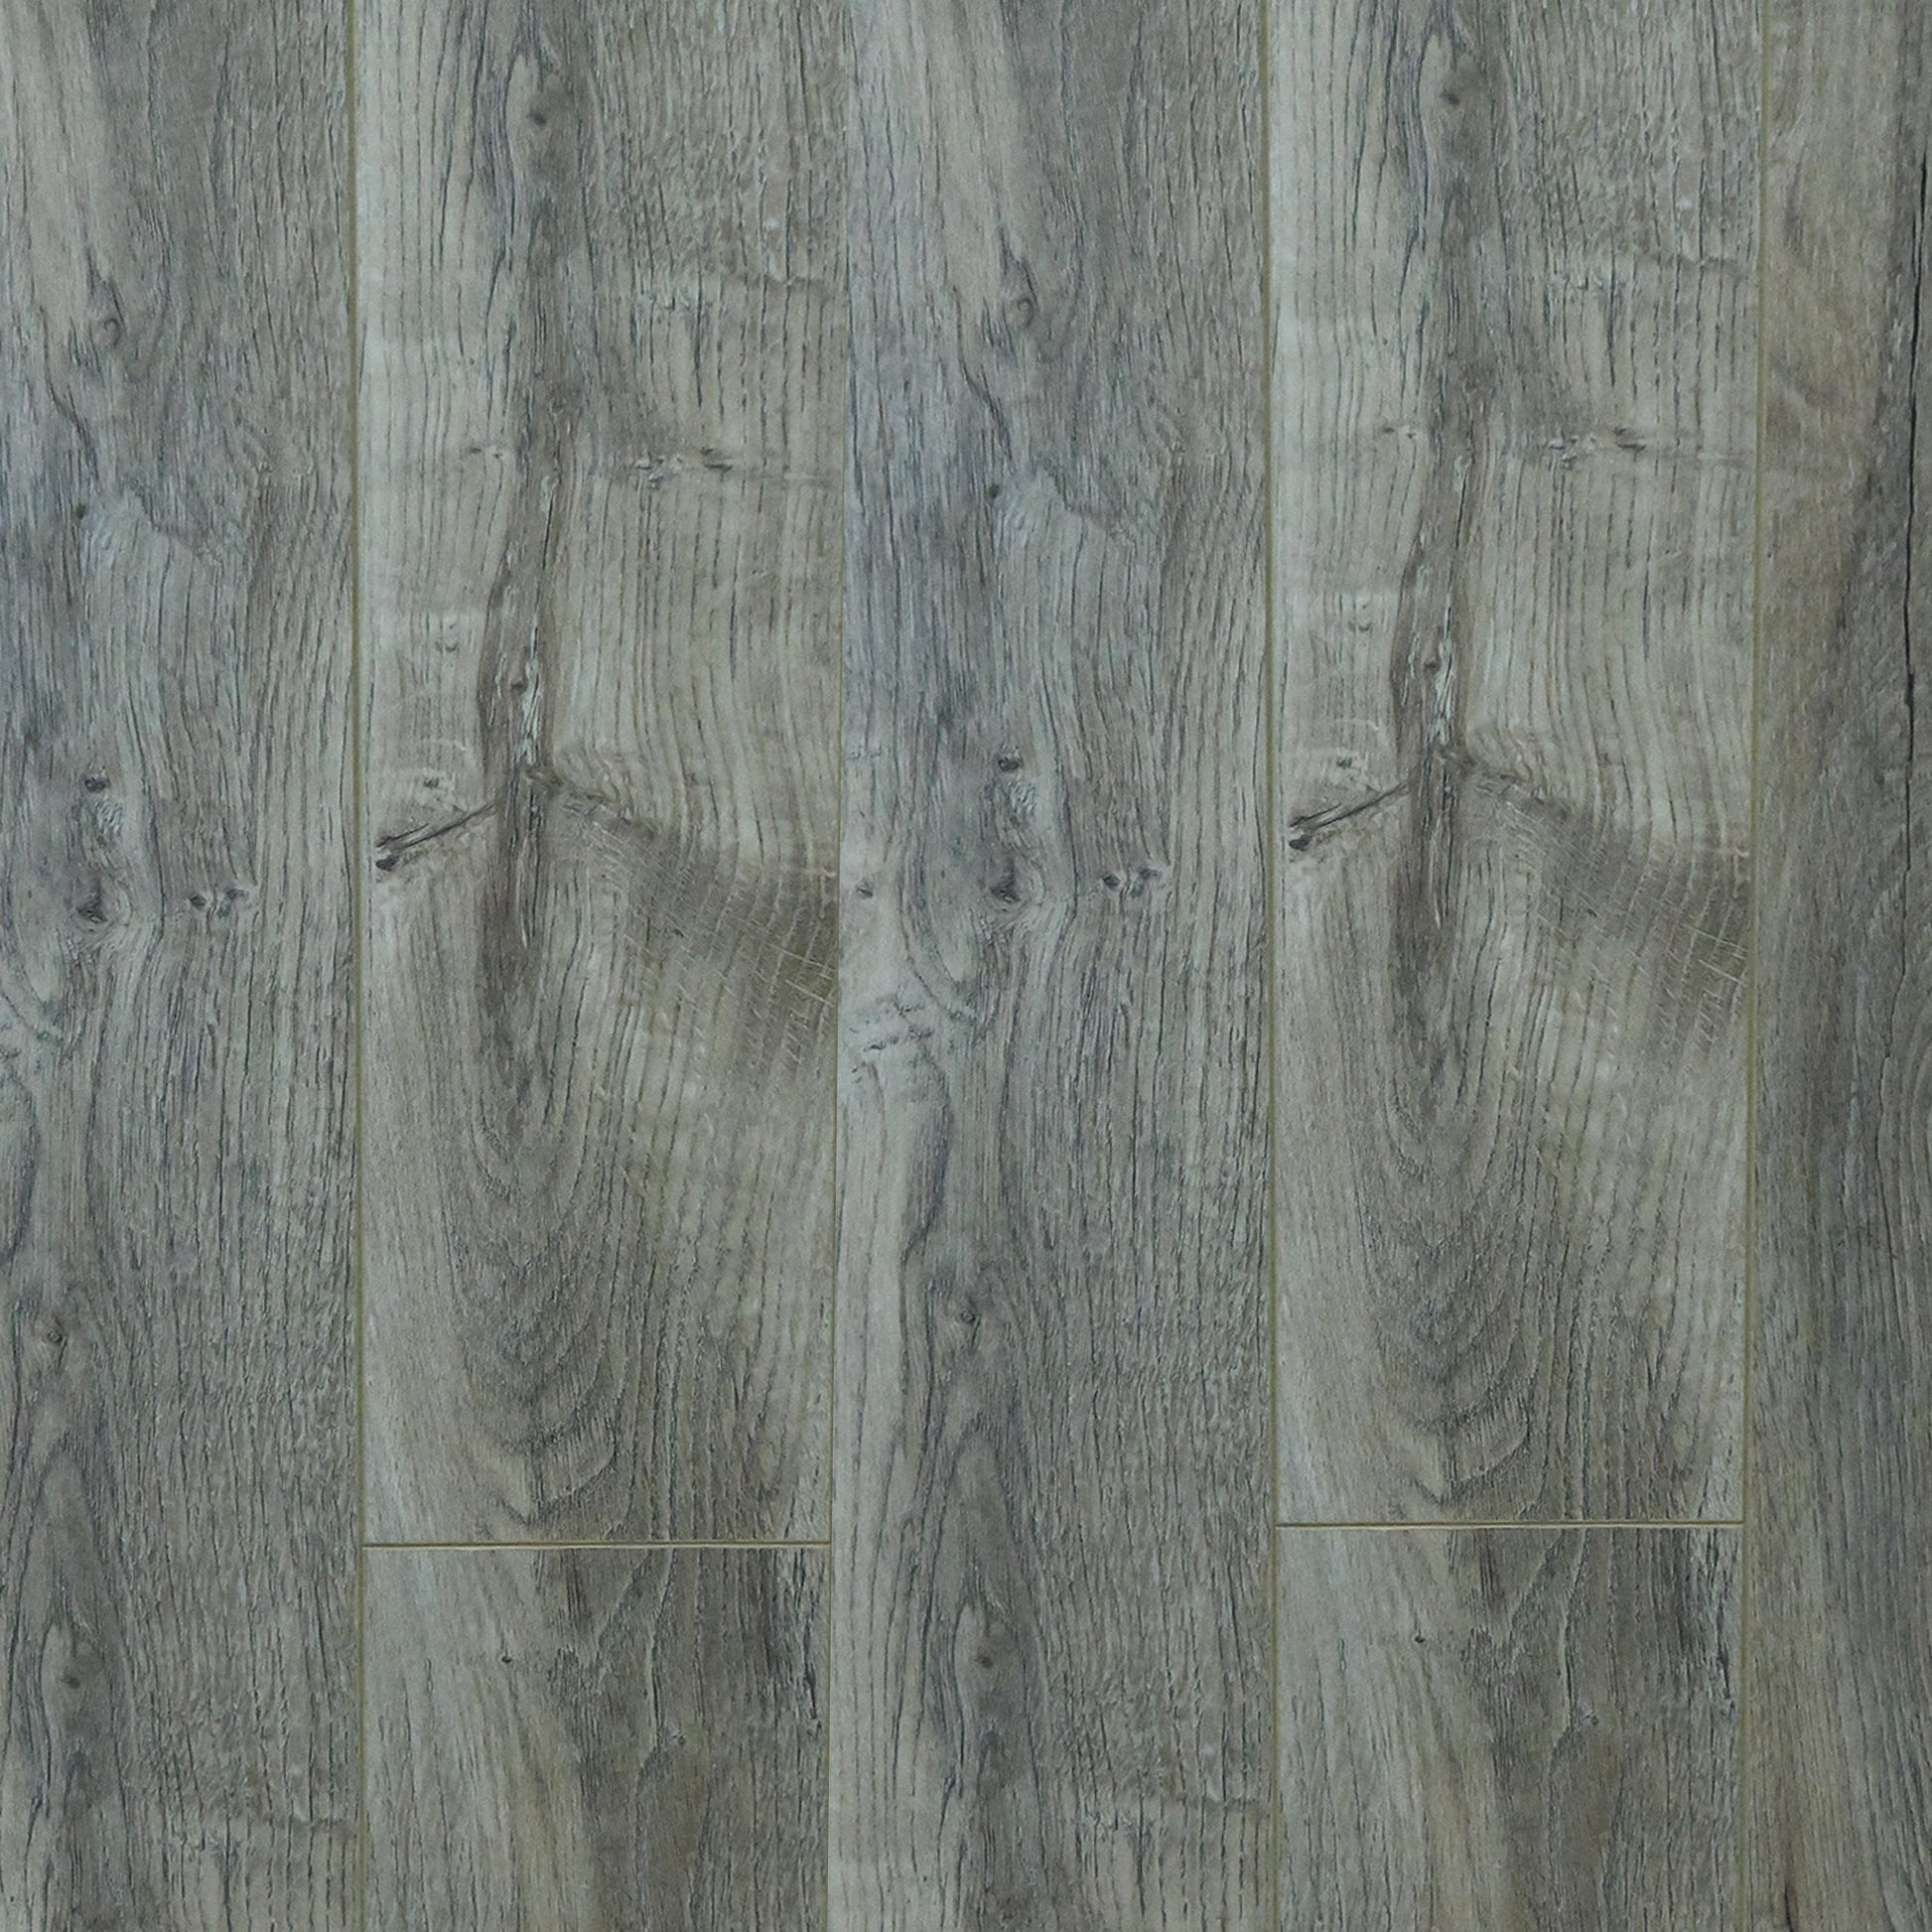 Lumber - Sample Laminate Flooring by KLD Home